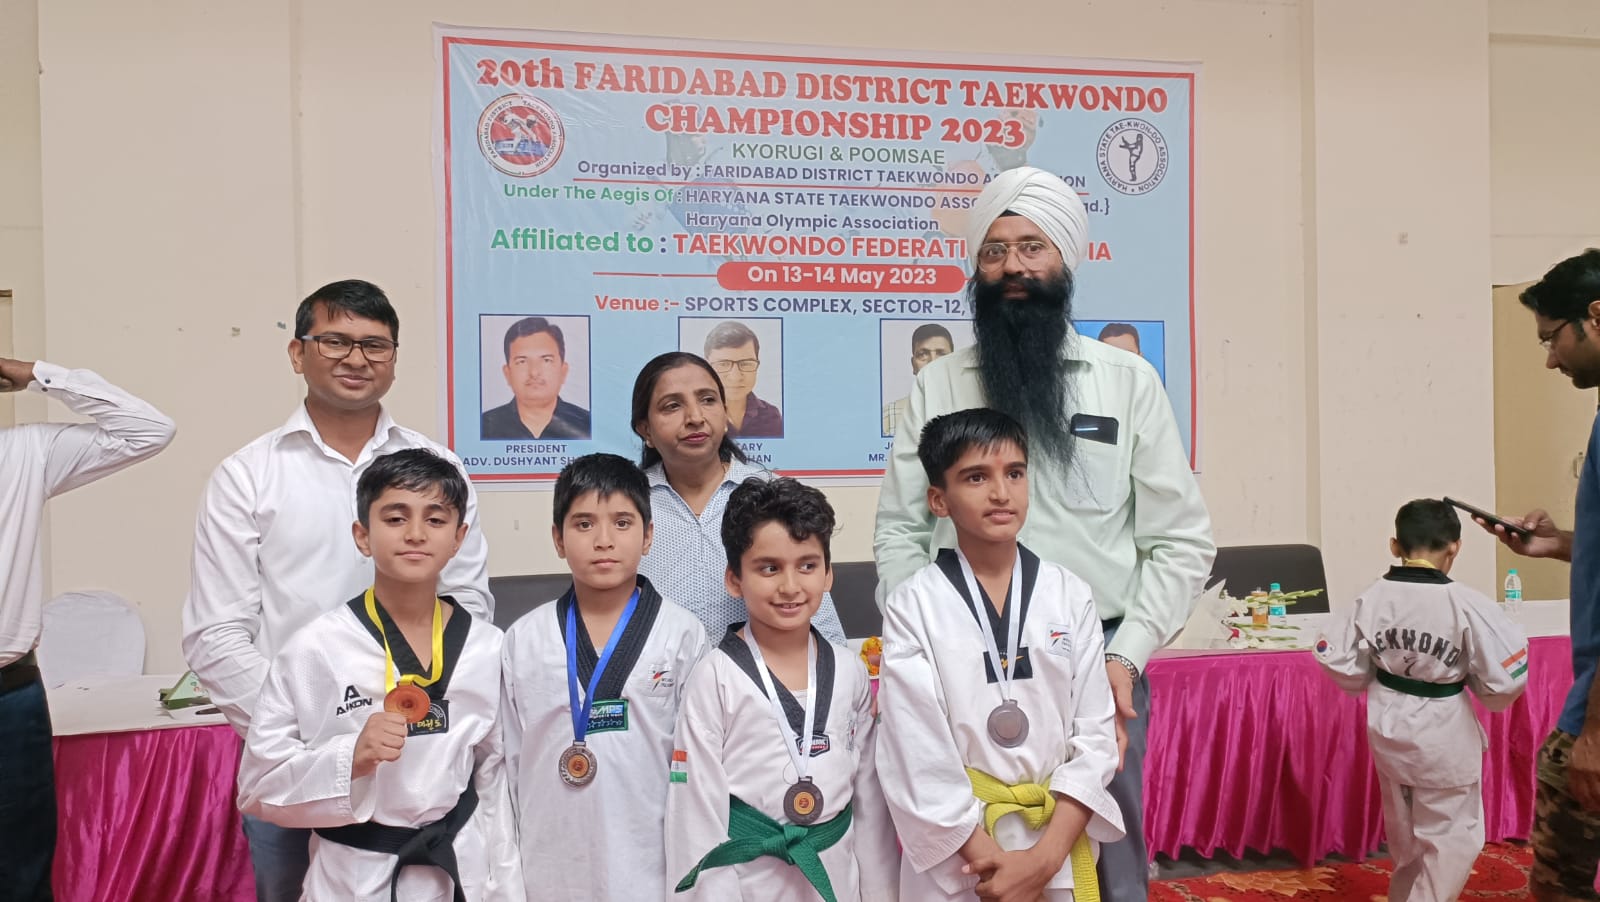 District Taekwondo Competition 2023